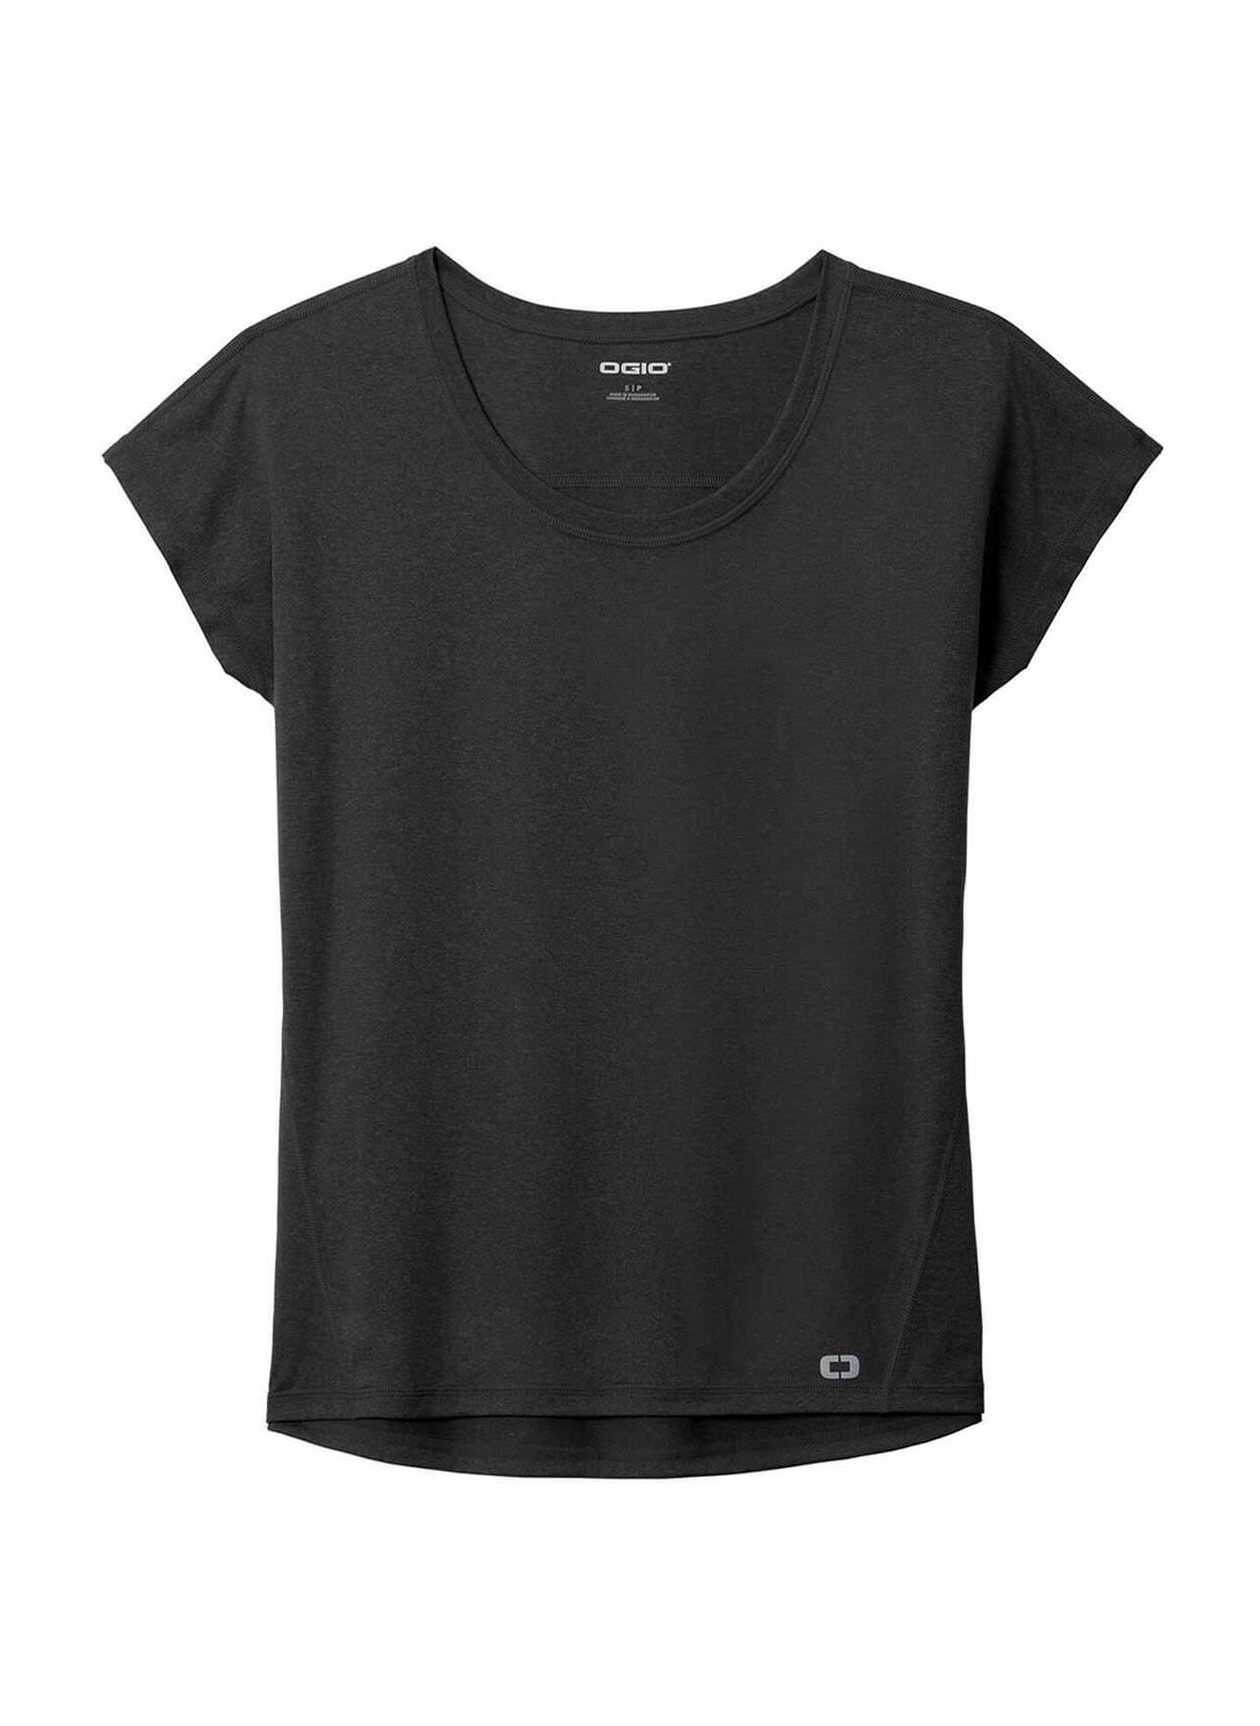 OGIO Women's Blacktop Pulse Dolman T-Shirt